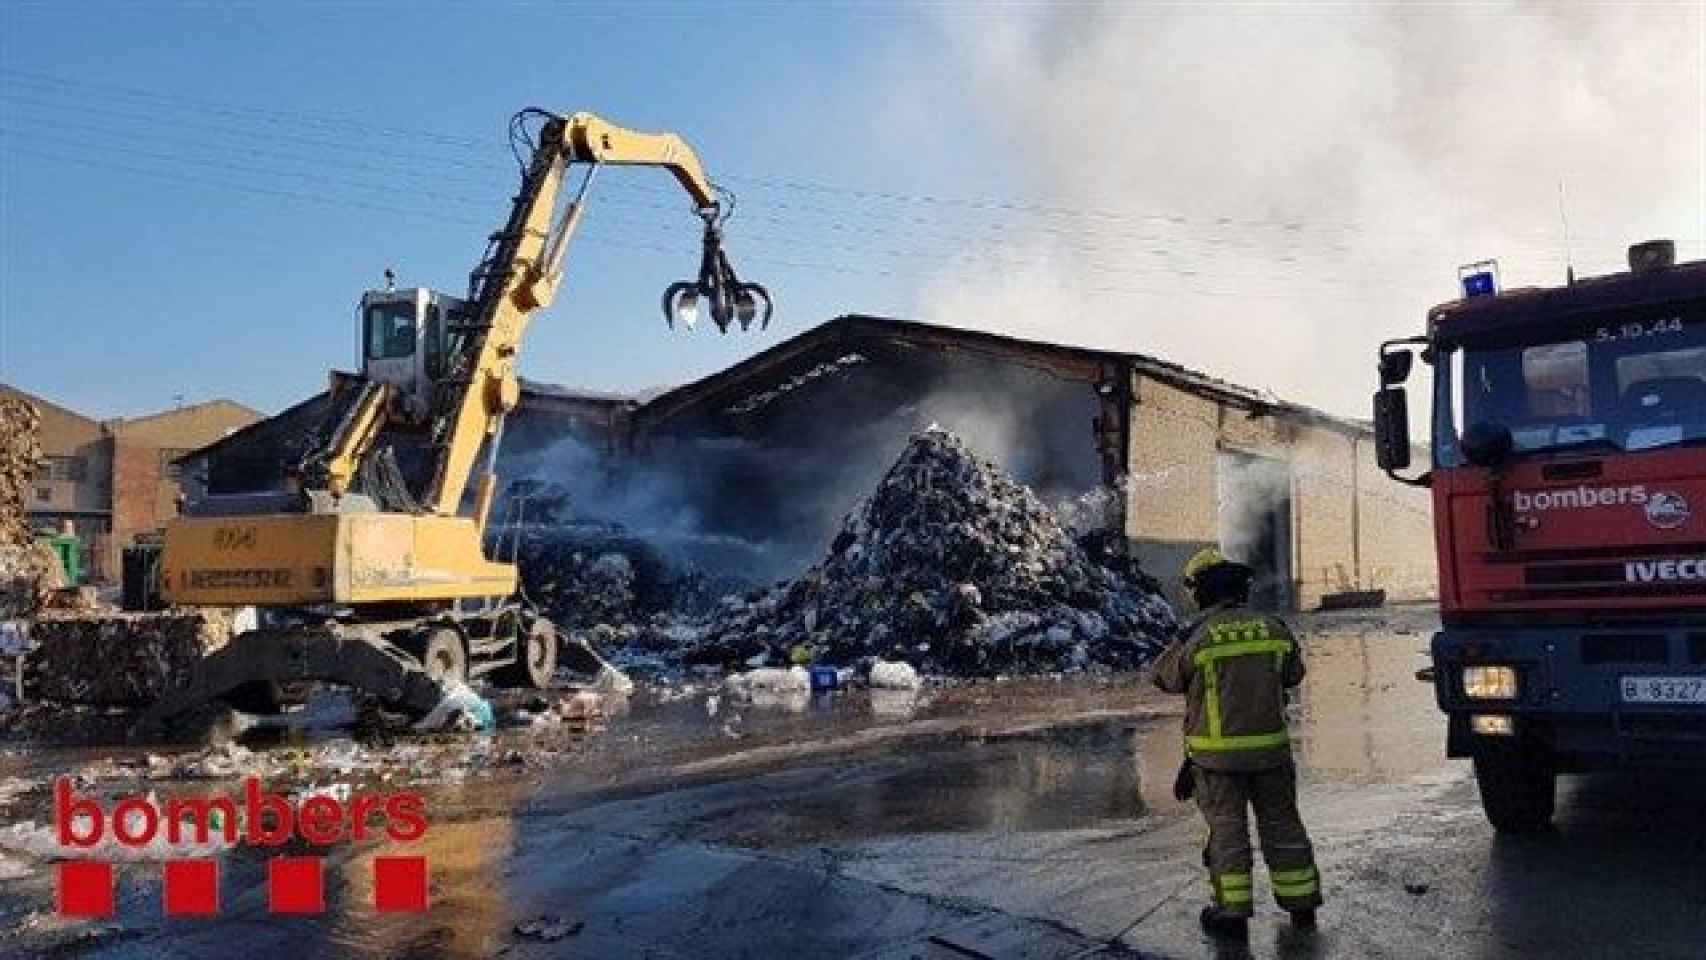 Bomberos trabajan para apagar el incendio en la planta de reciclaje en Sant Feliu de Llobregat / BOMBERS